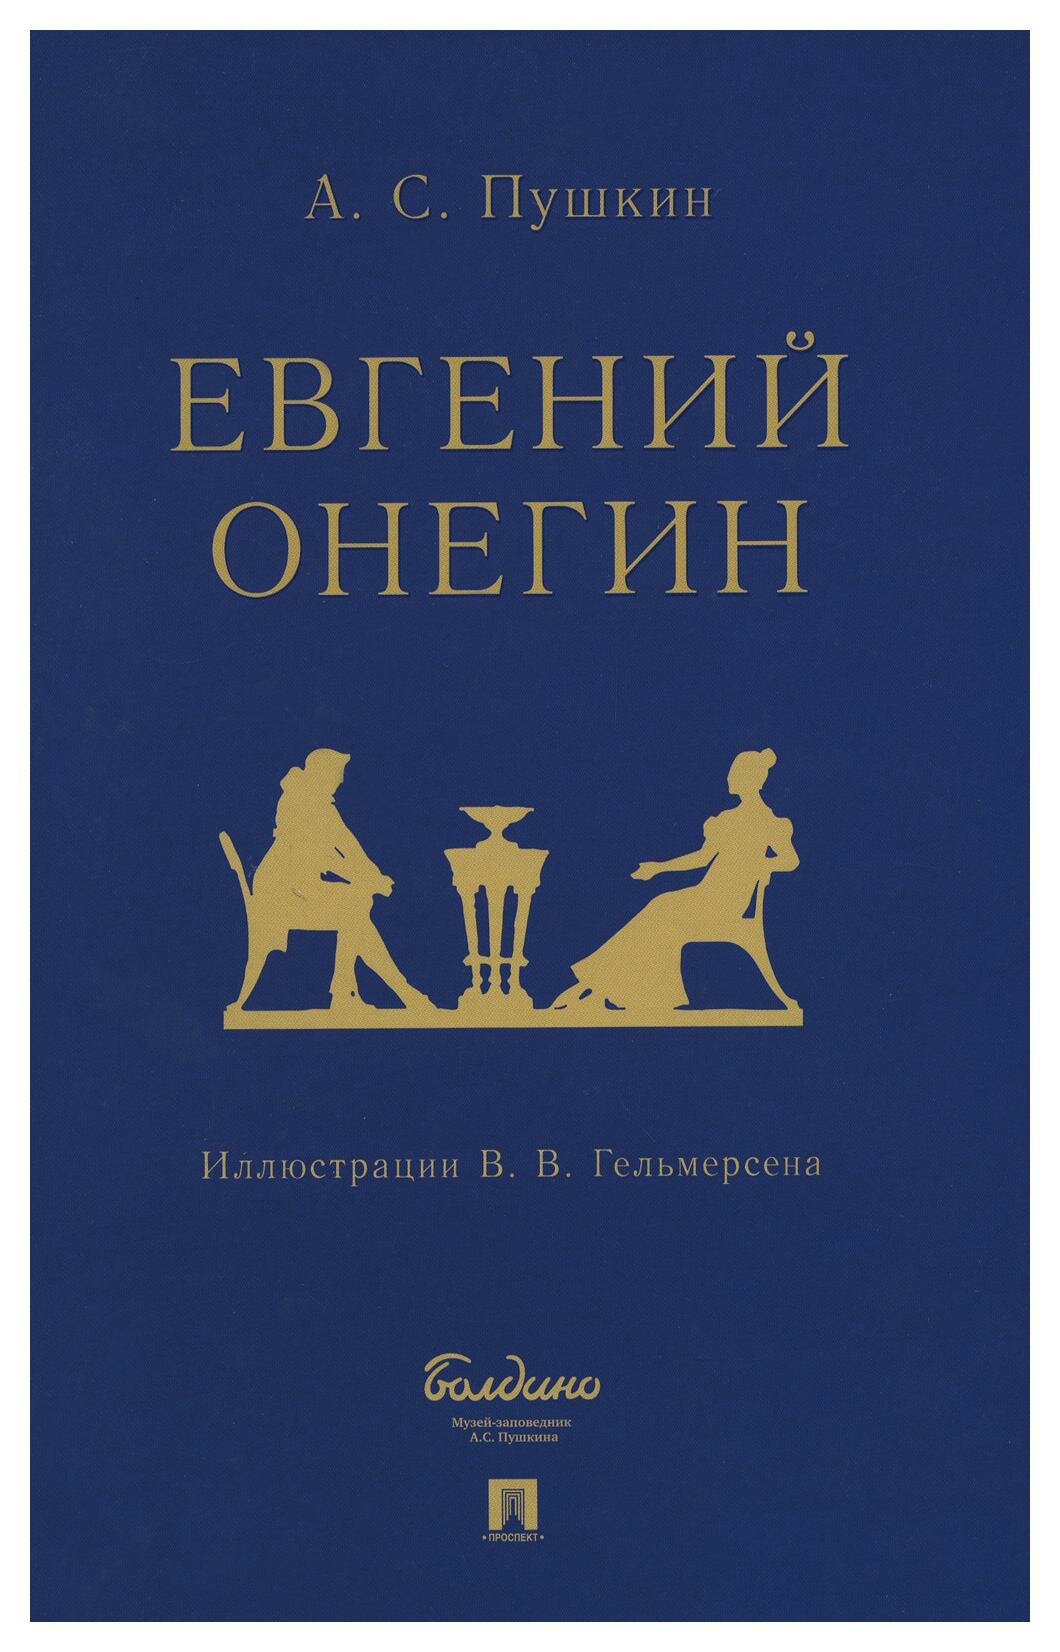 Евгений Онегин: роман в стихах. Пушкин А. С. Проспект